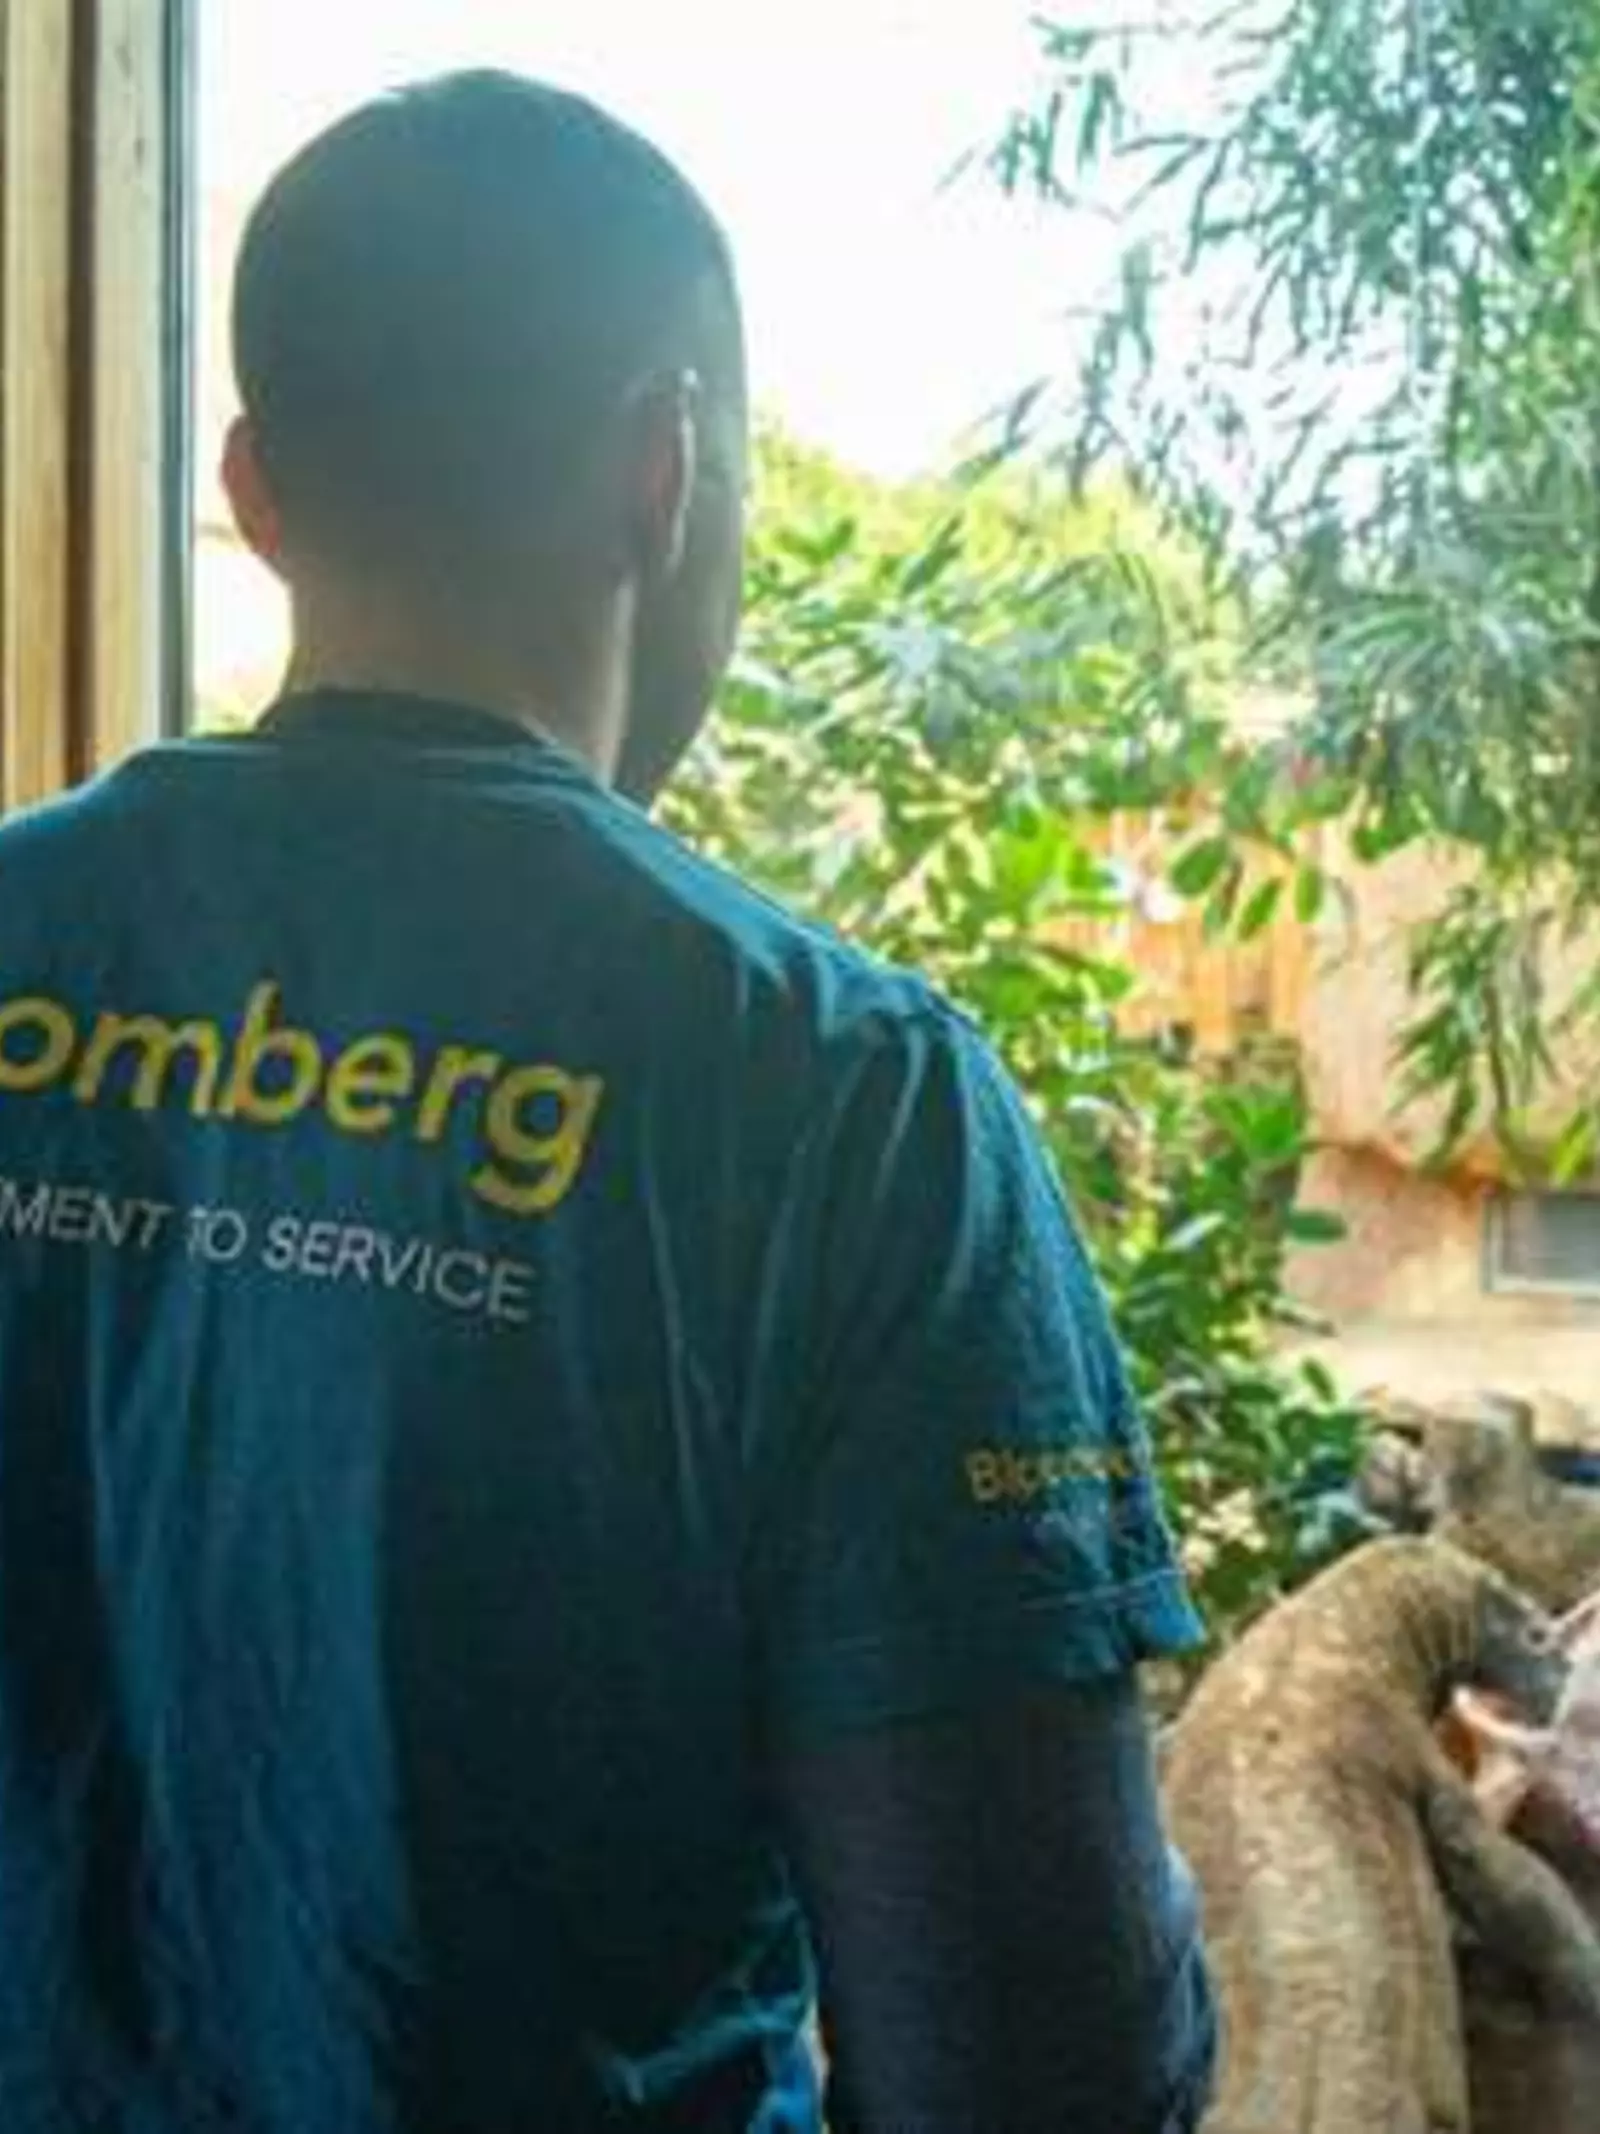 Bloomberg partnership London Zoo